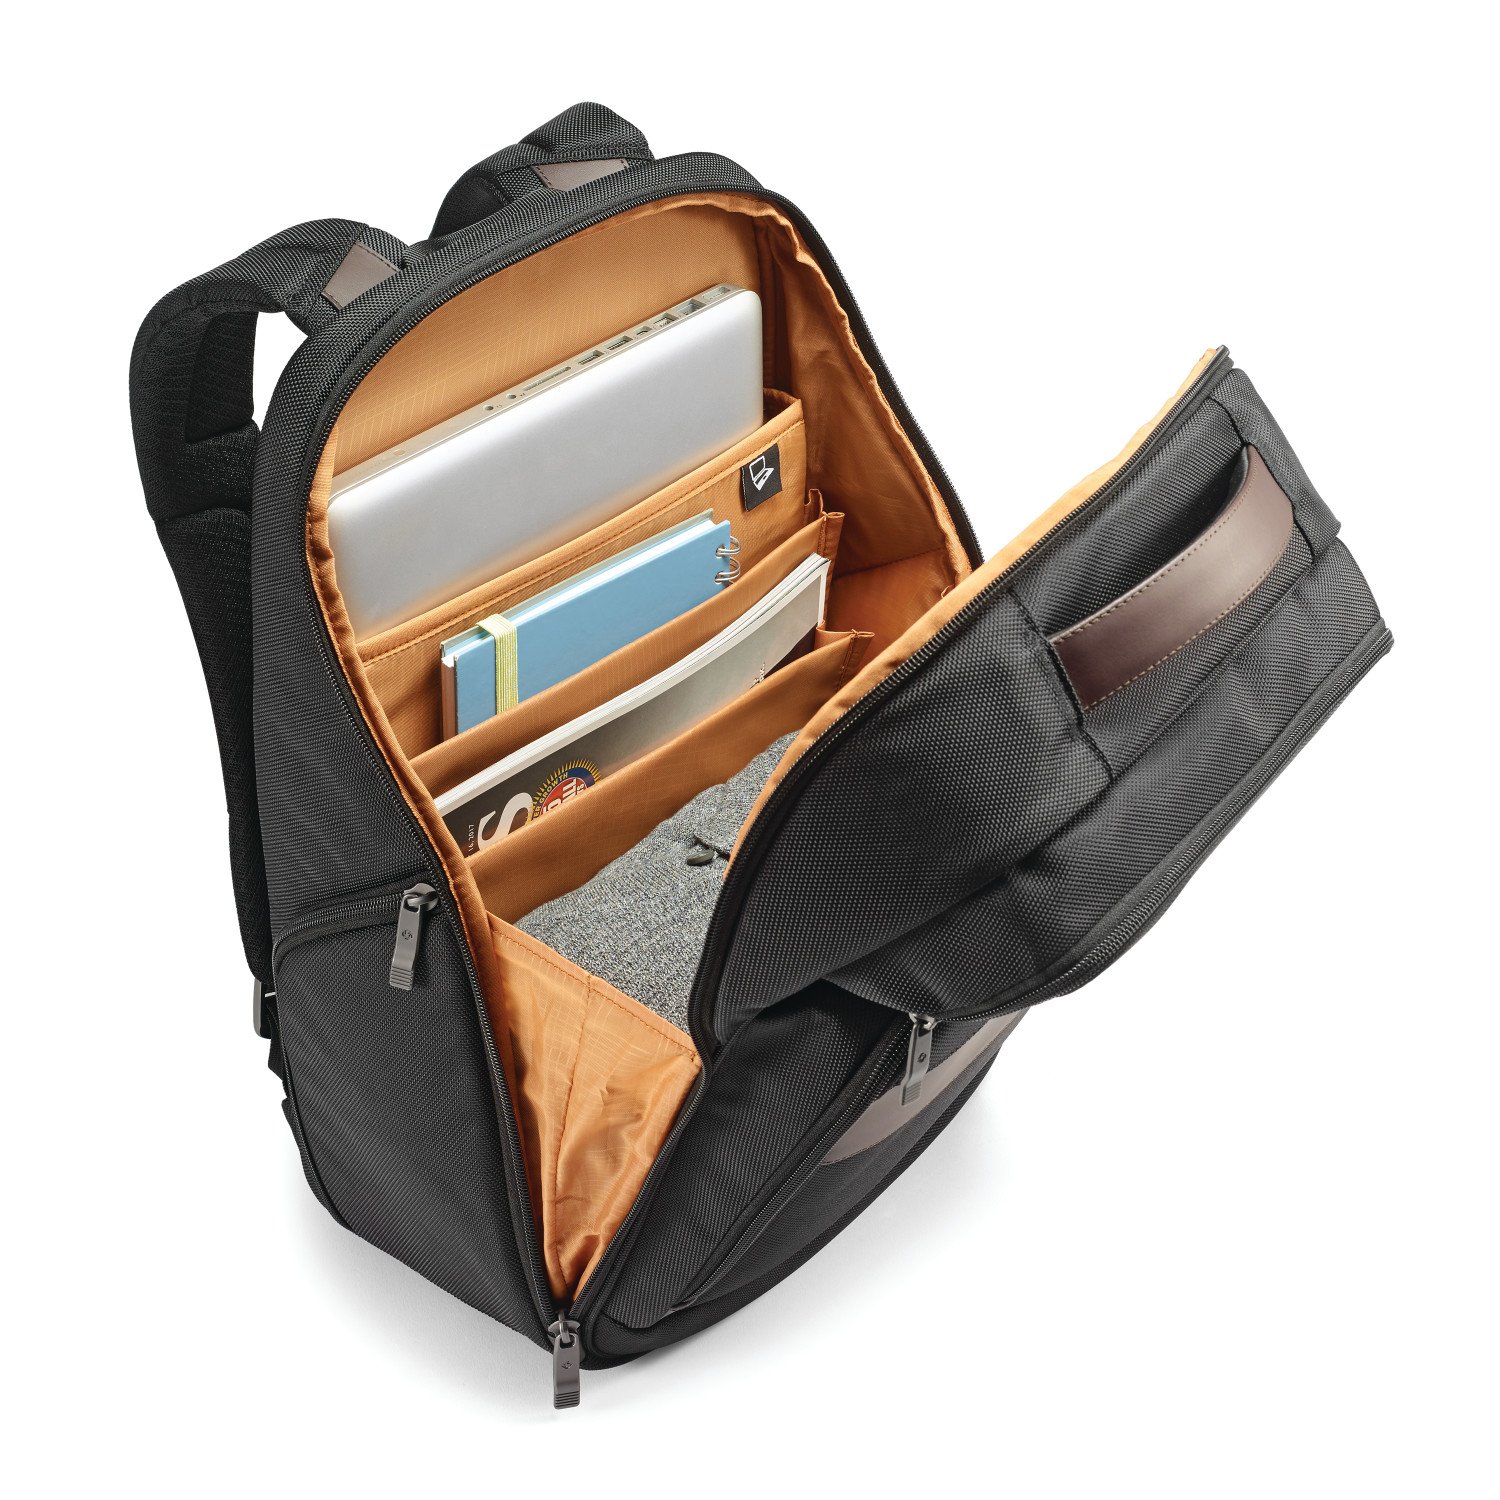 Samsonite Kombi Business Backpack, Black/Brown, 17.5 x 12 x 7-Inch